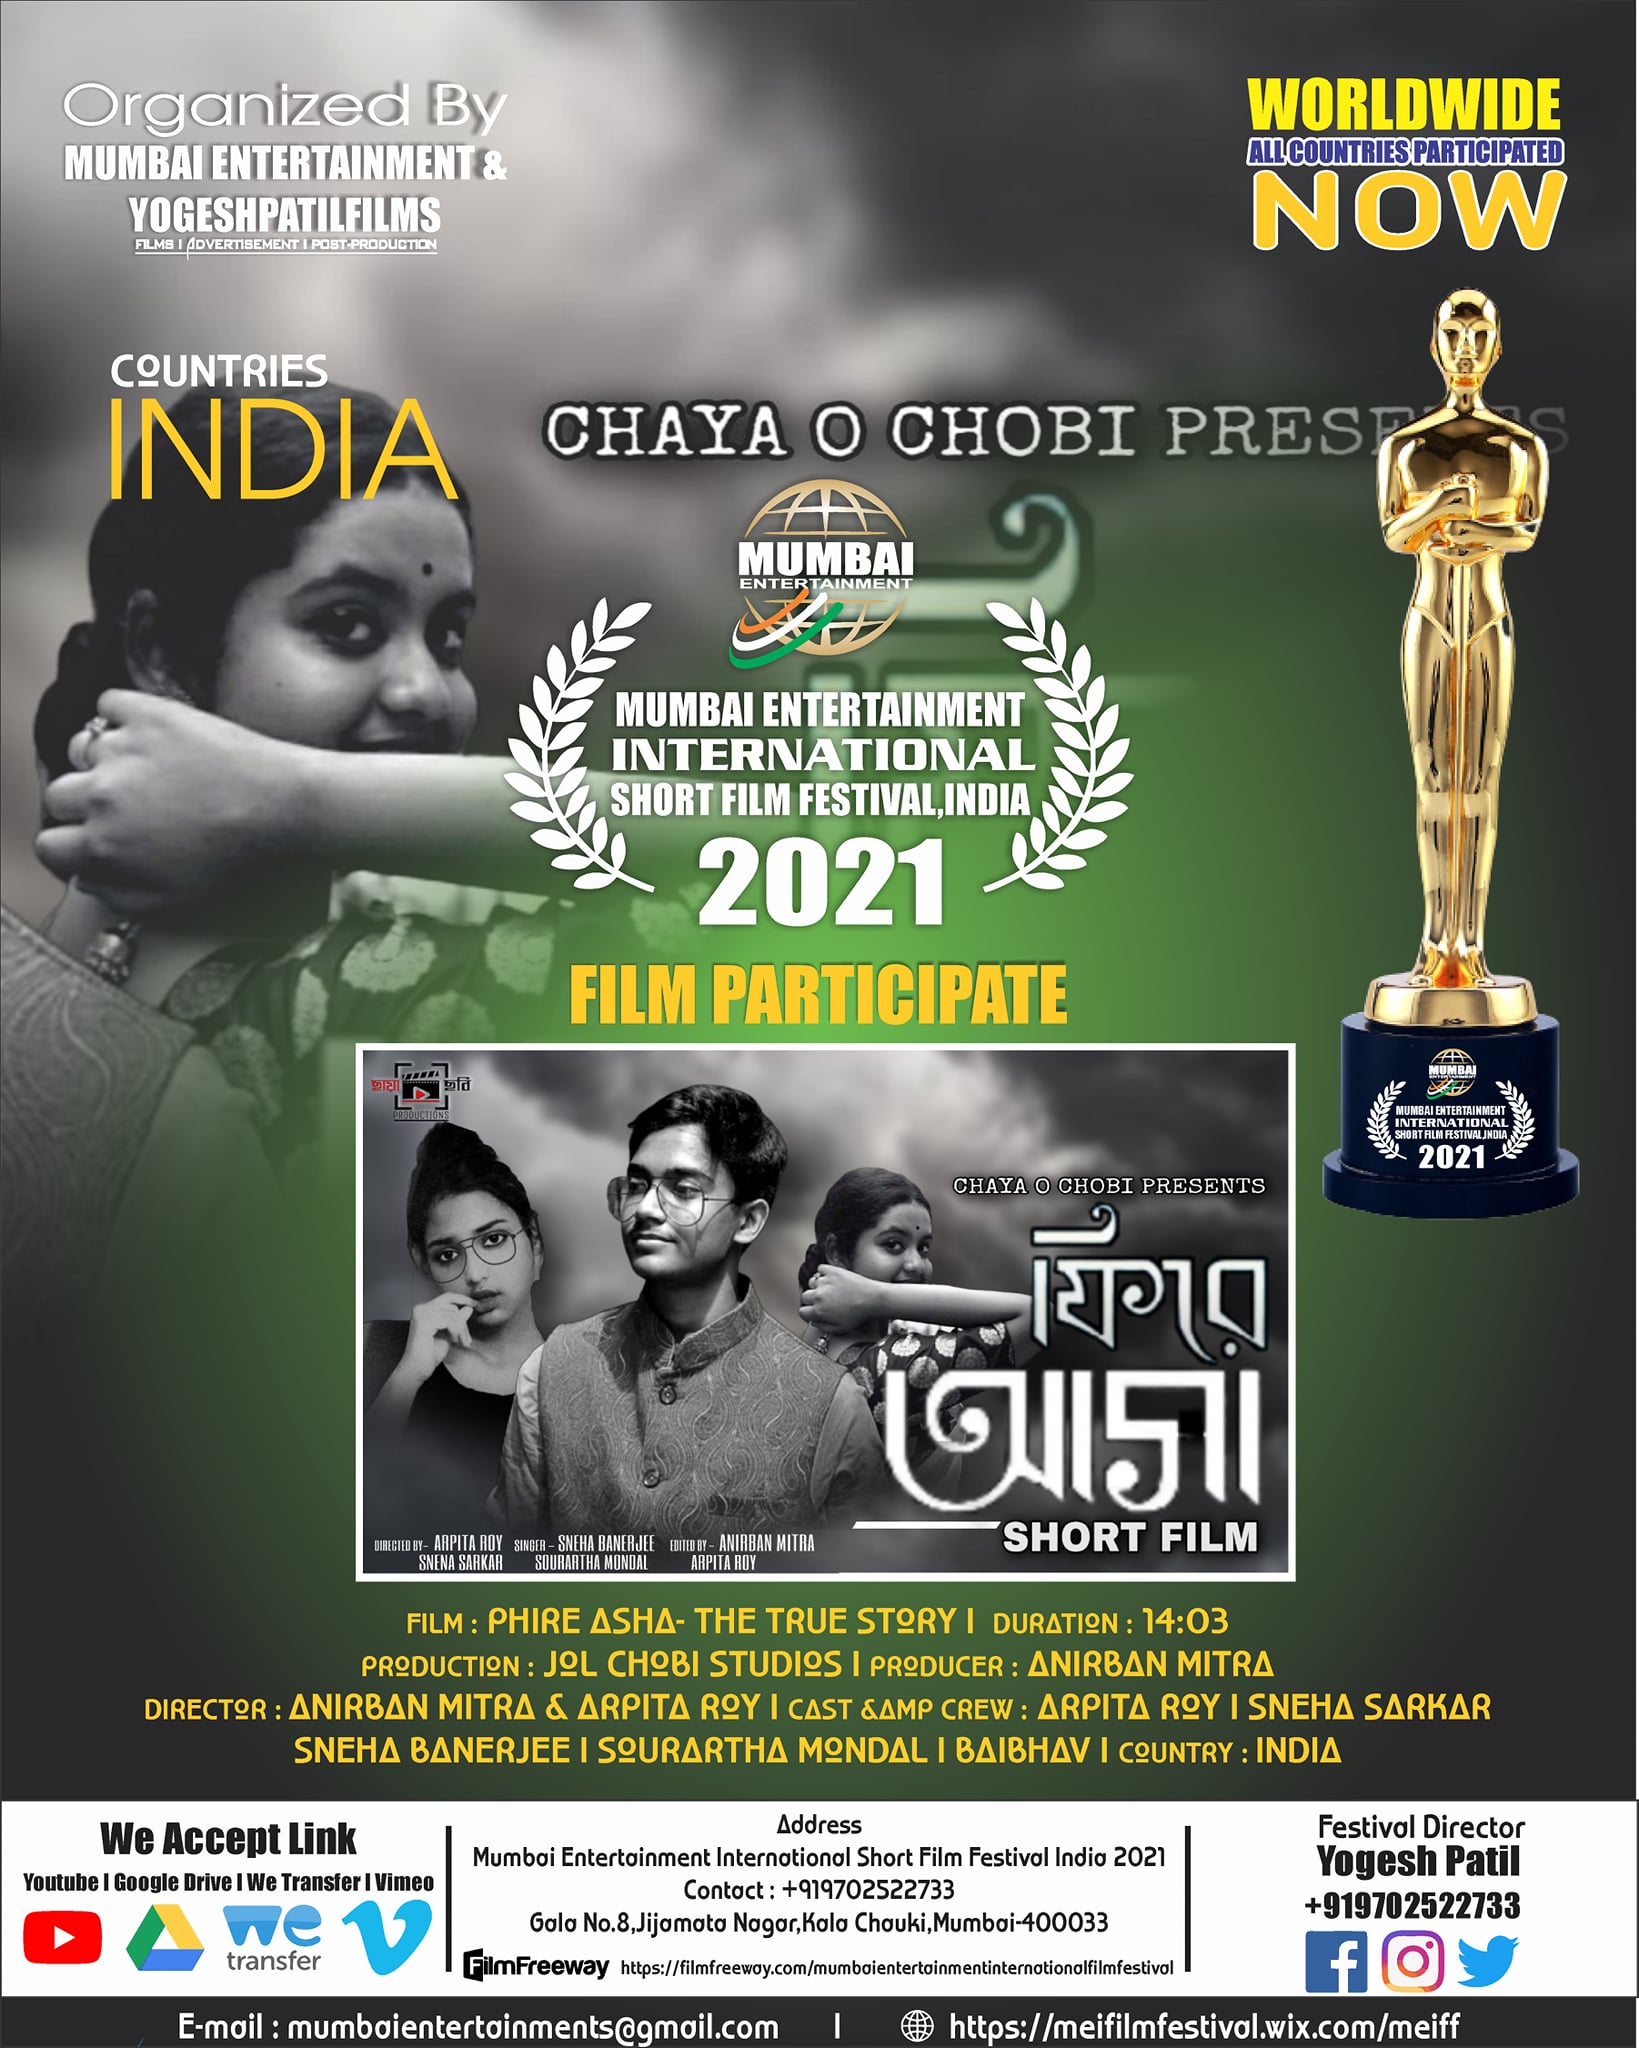 Mumbai Entertainment International Short Film Festival